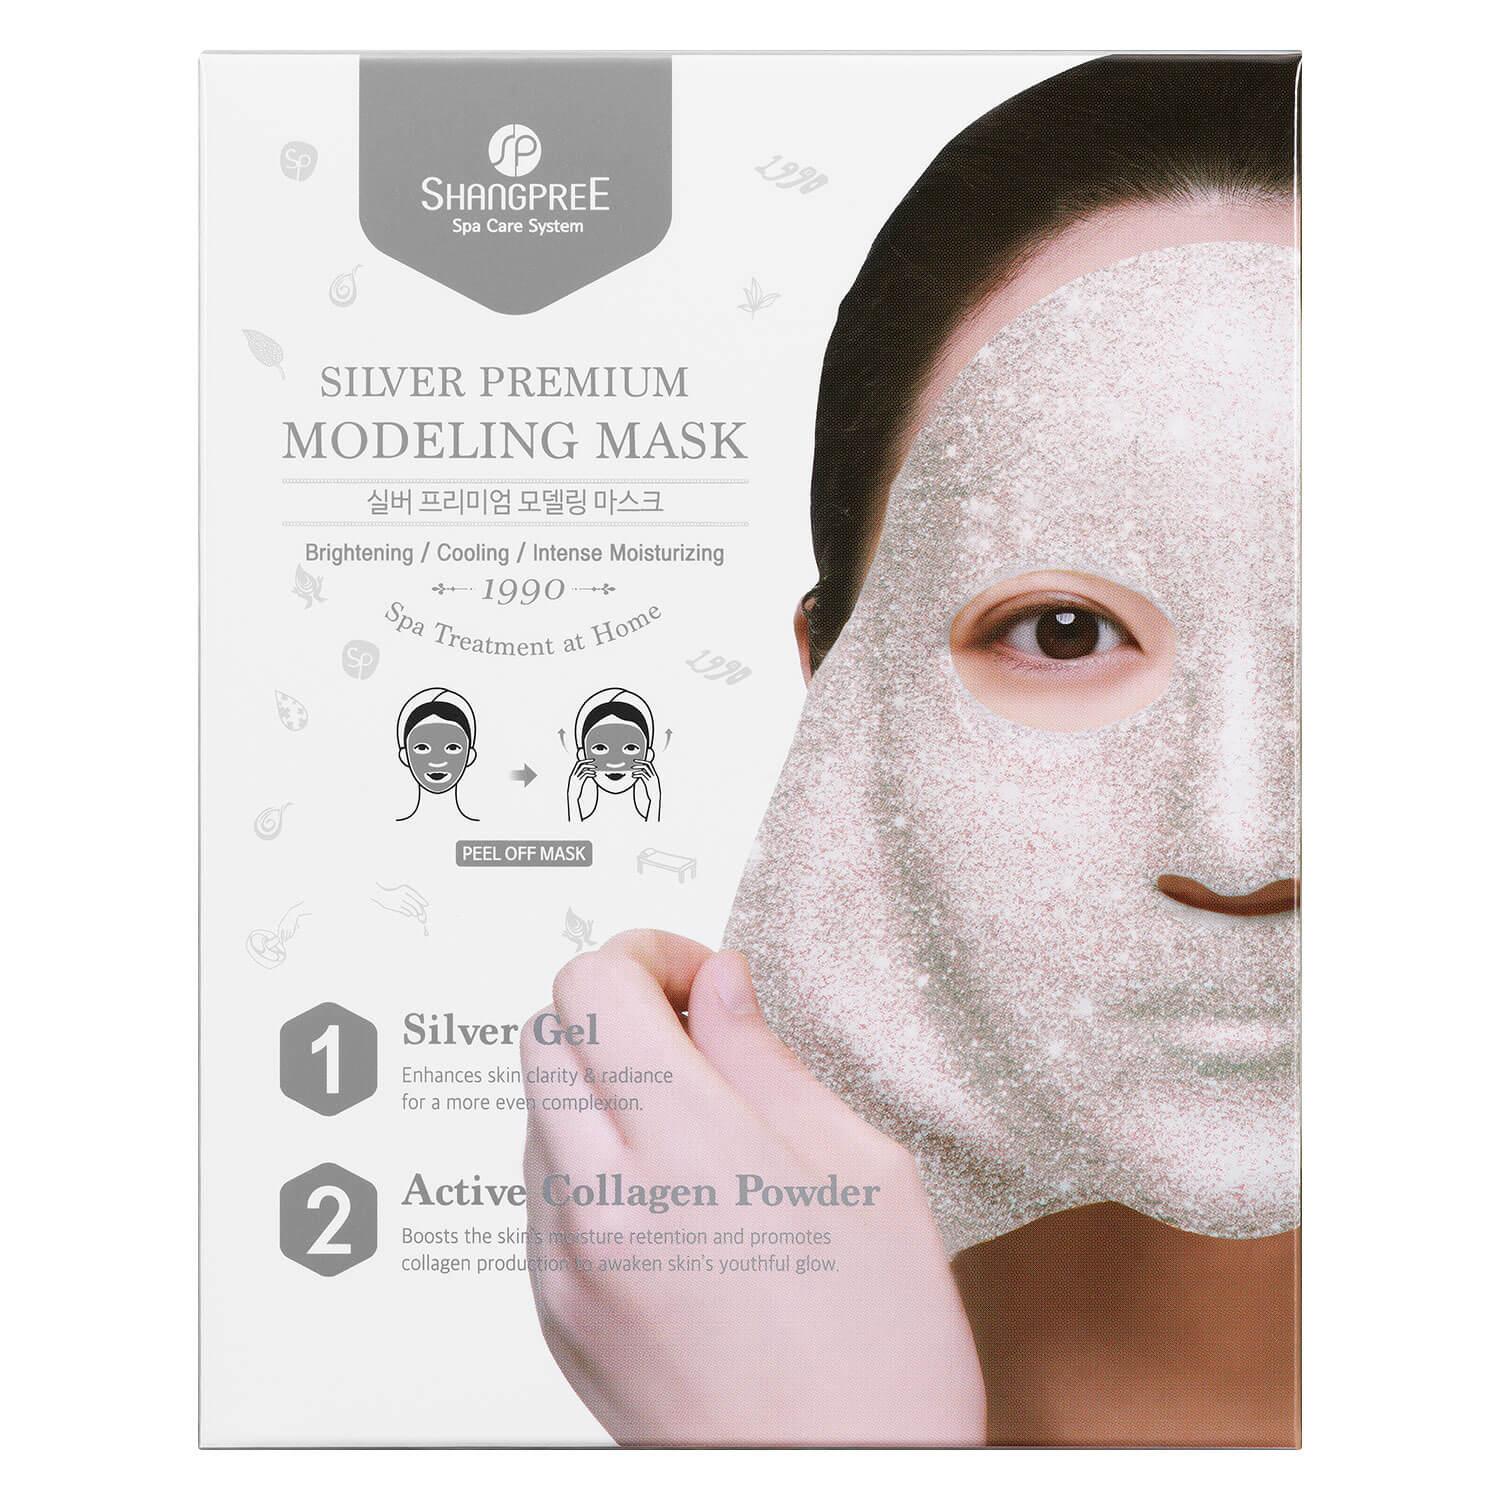 SHANGPREE - Silver Premium Modeling Mask